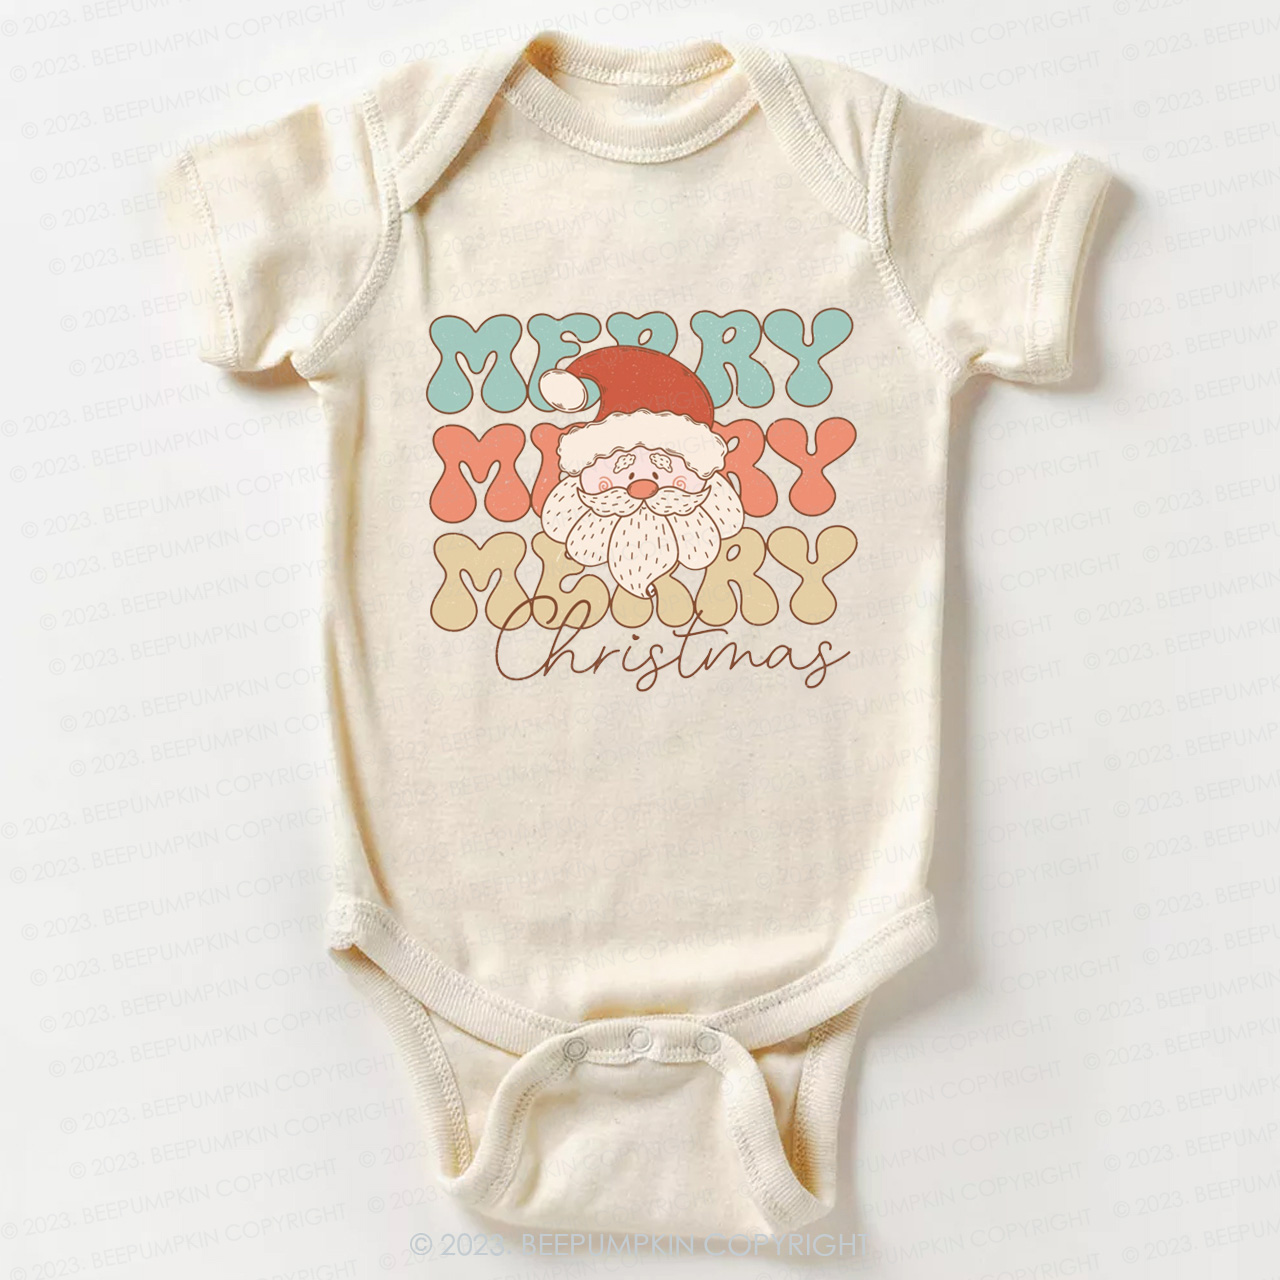 Merry Christmas Retro Santa Bodysuit For Baby Beepumpkin